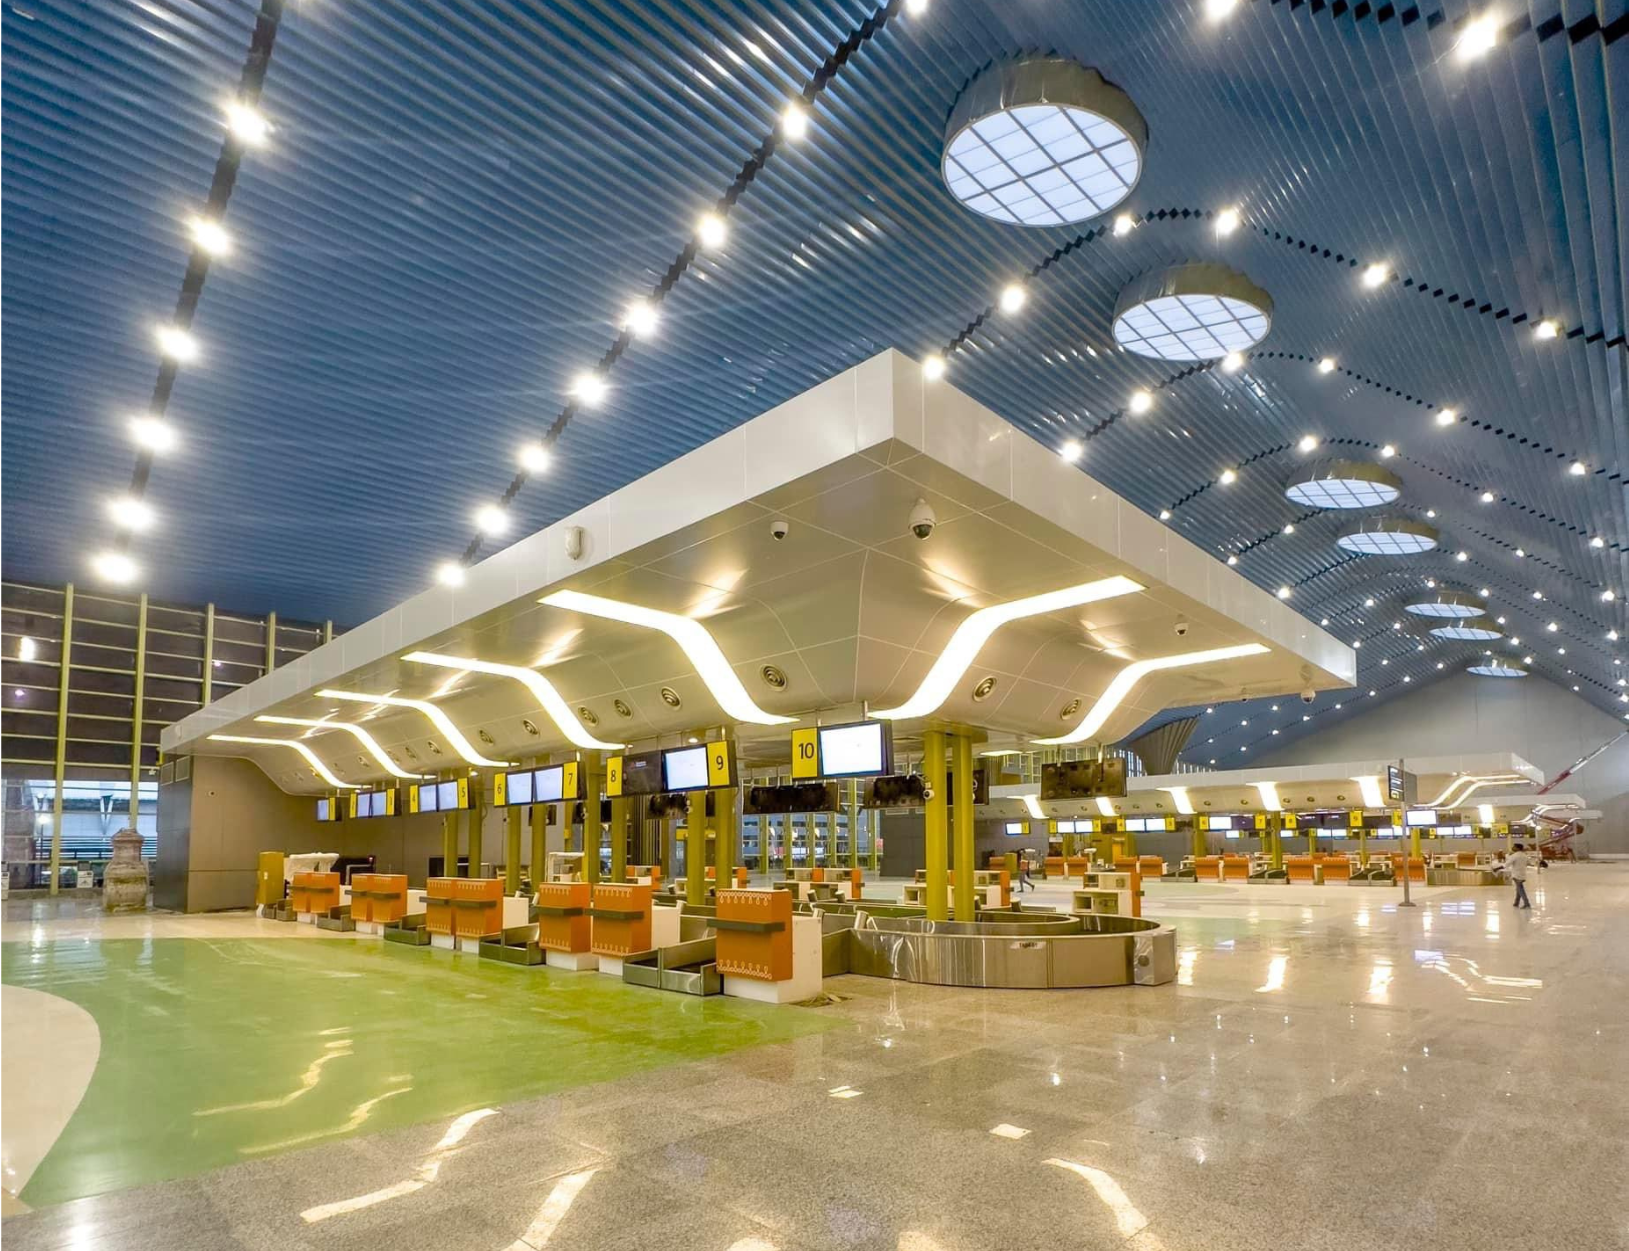 The interior of Chennai International Airport’s (MAA) new terminal